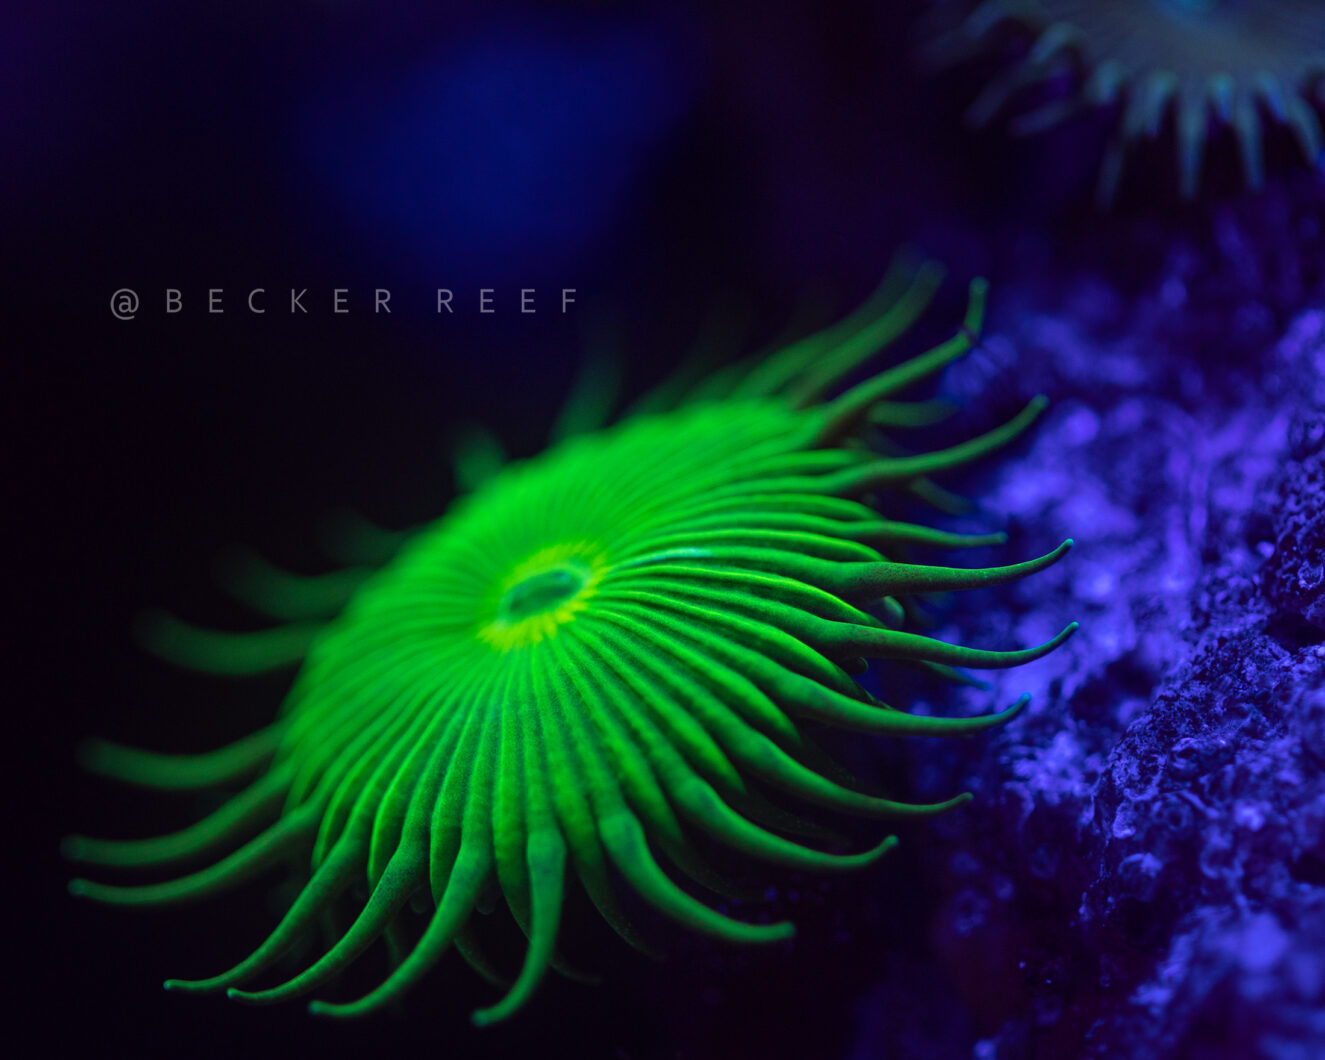 Kit de lentes Orphek para fotos incríveis de coral